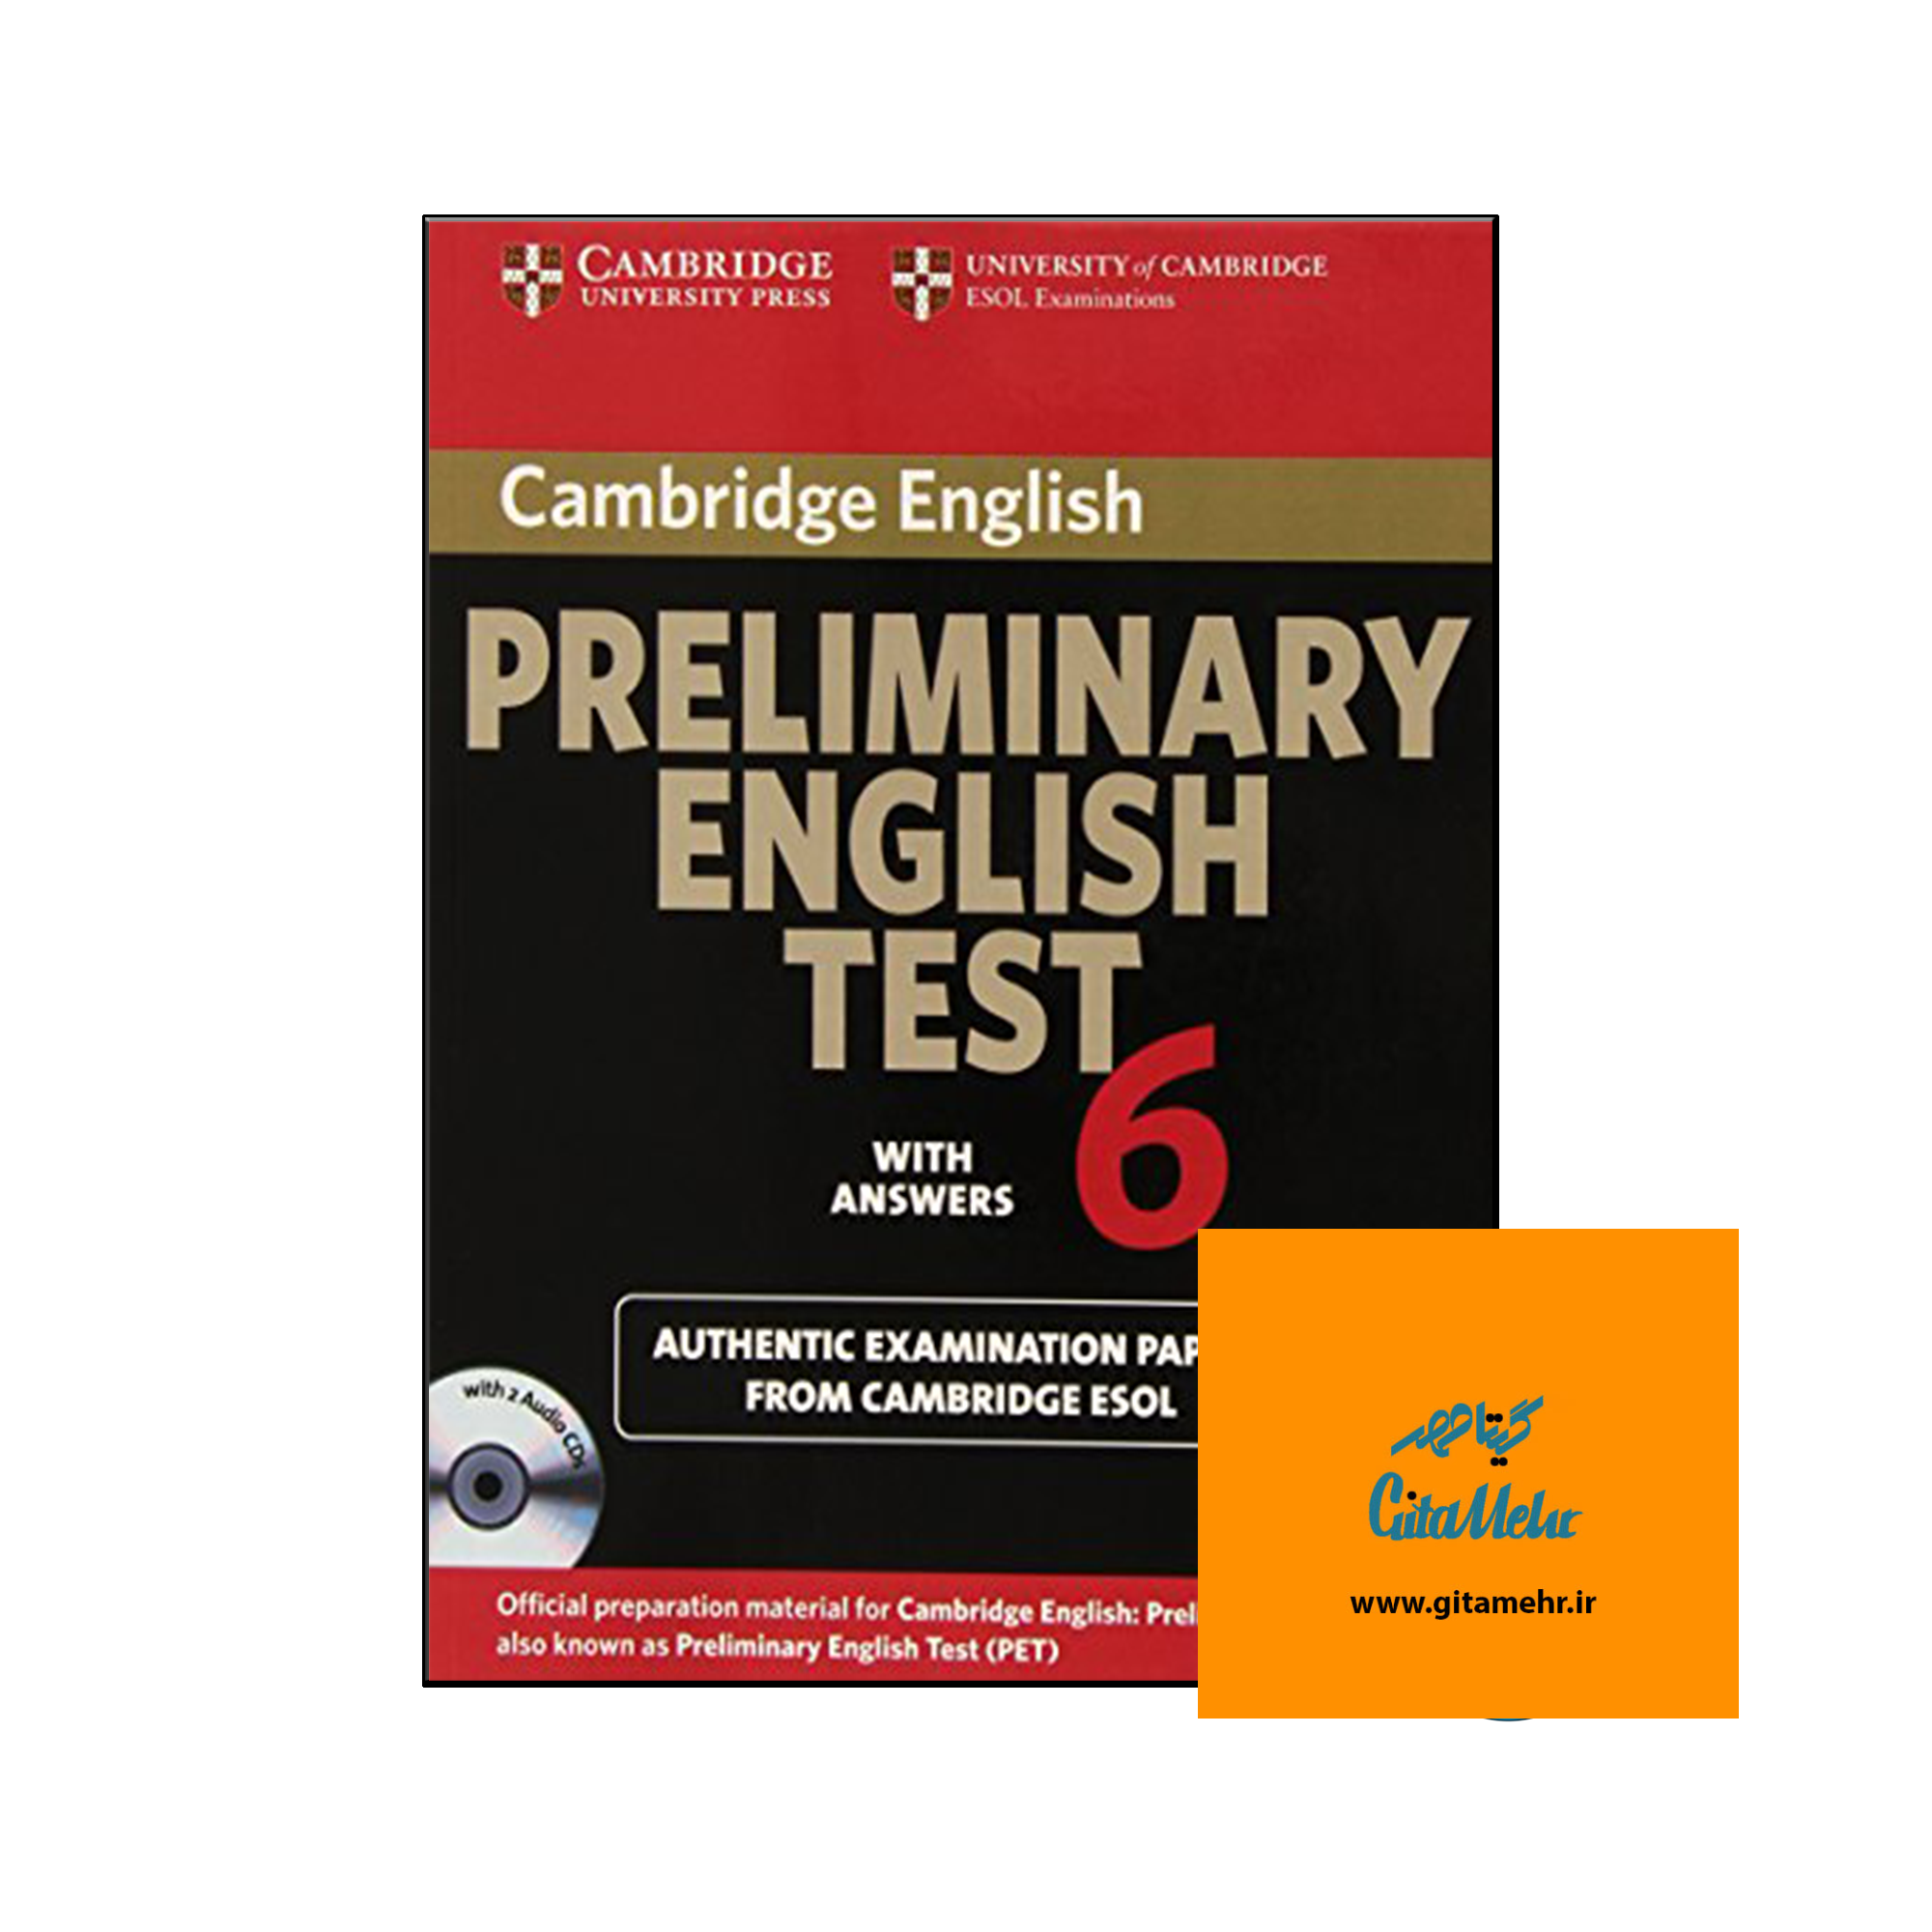 daa9d8aad8a7d8a8 cambridge preliminary english test 6 self study pack 65ecb028aeb18